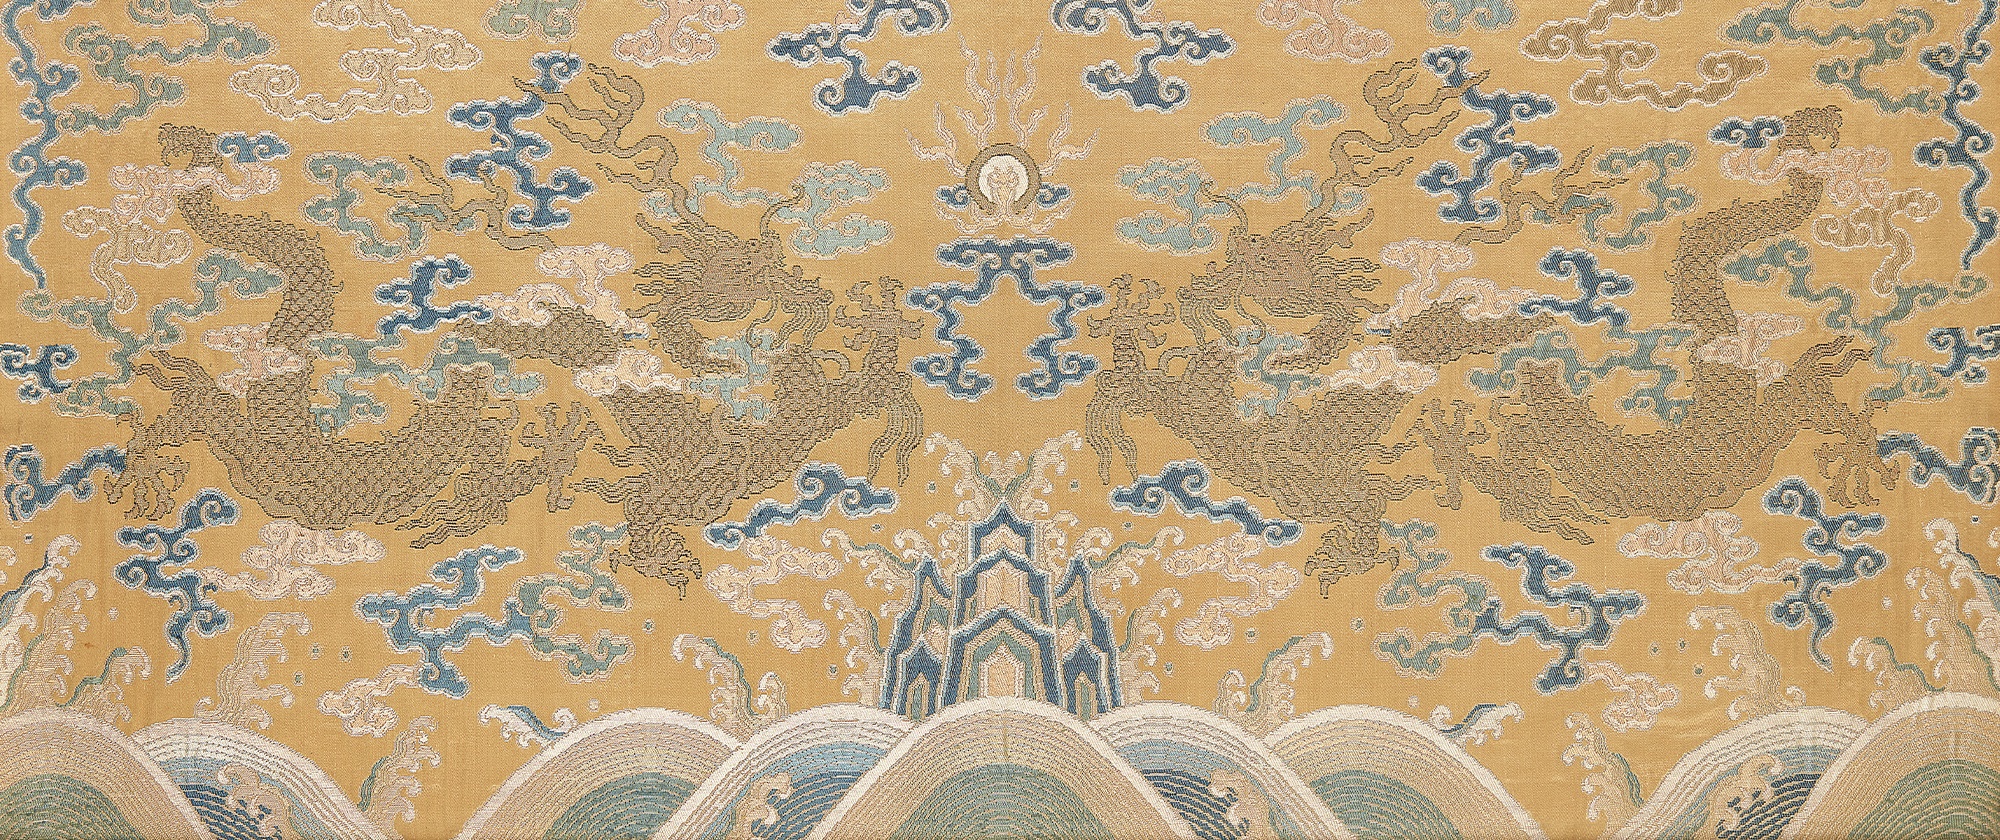 Qianlong Brocade 'Dragon' Panel